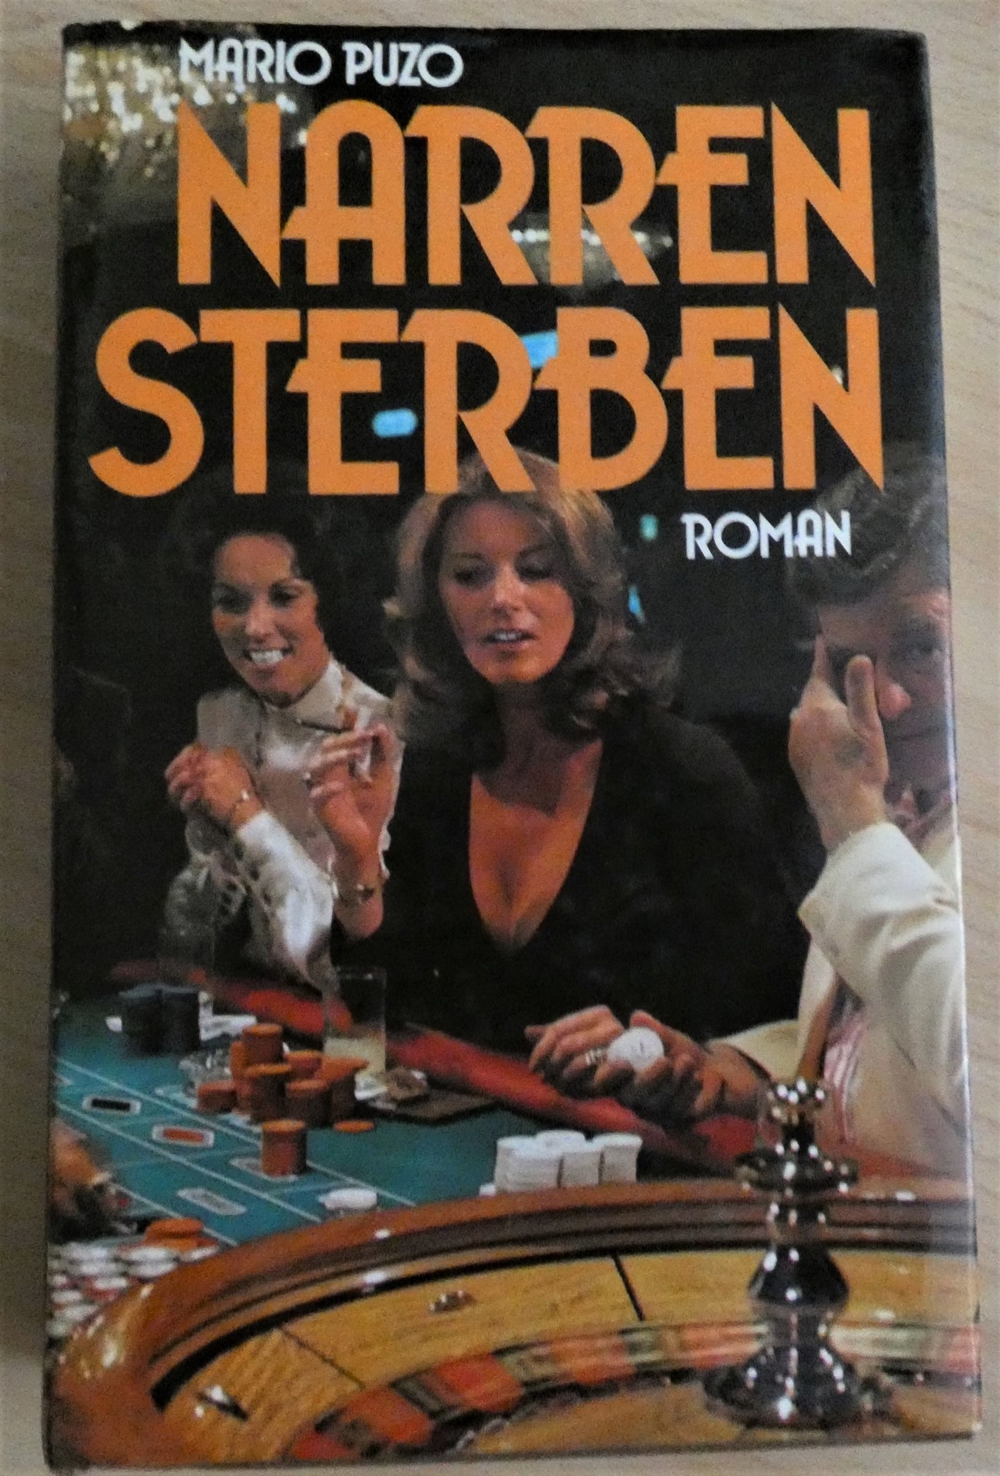 NARREN STERBEN / roman v. Mario Puzo / Buch-Nr. 02697 1